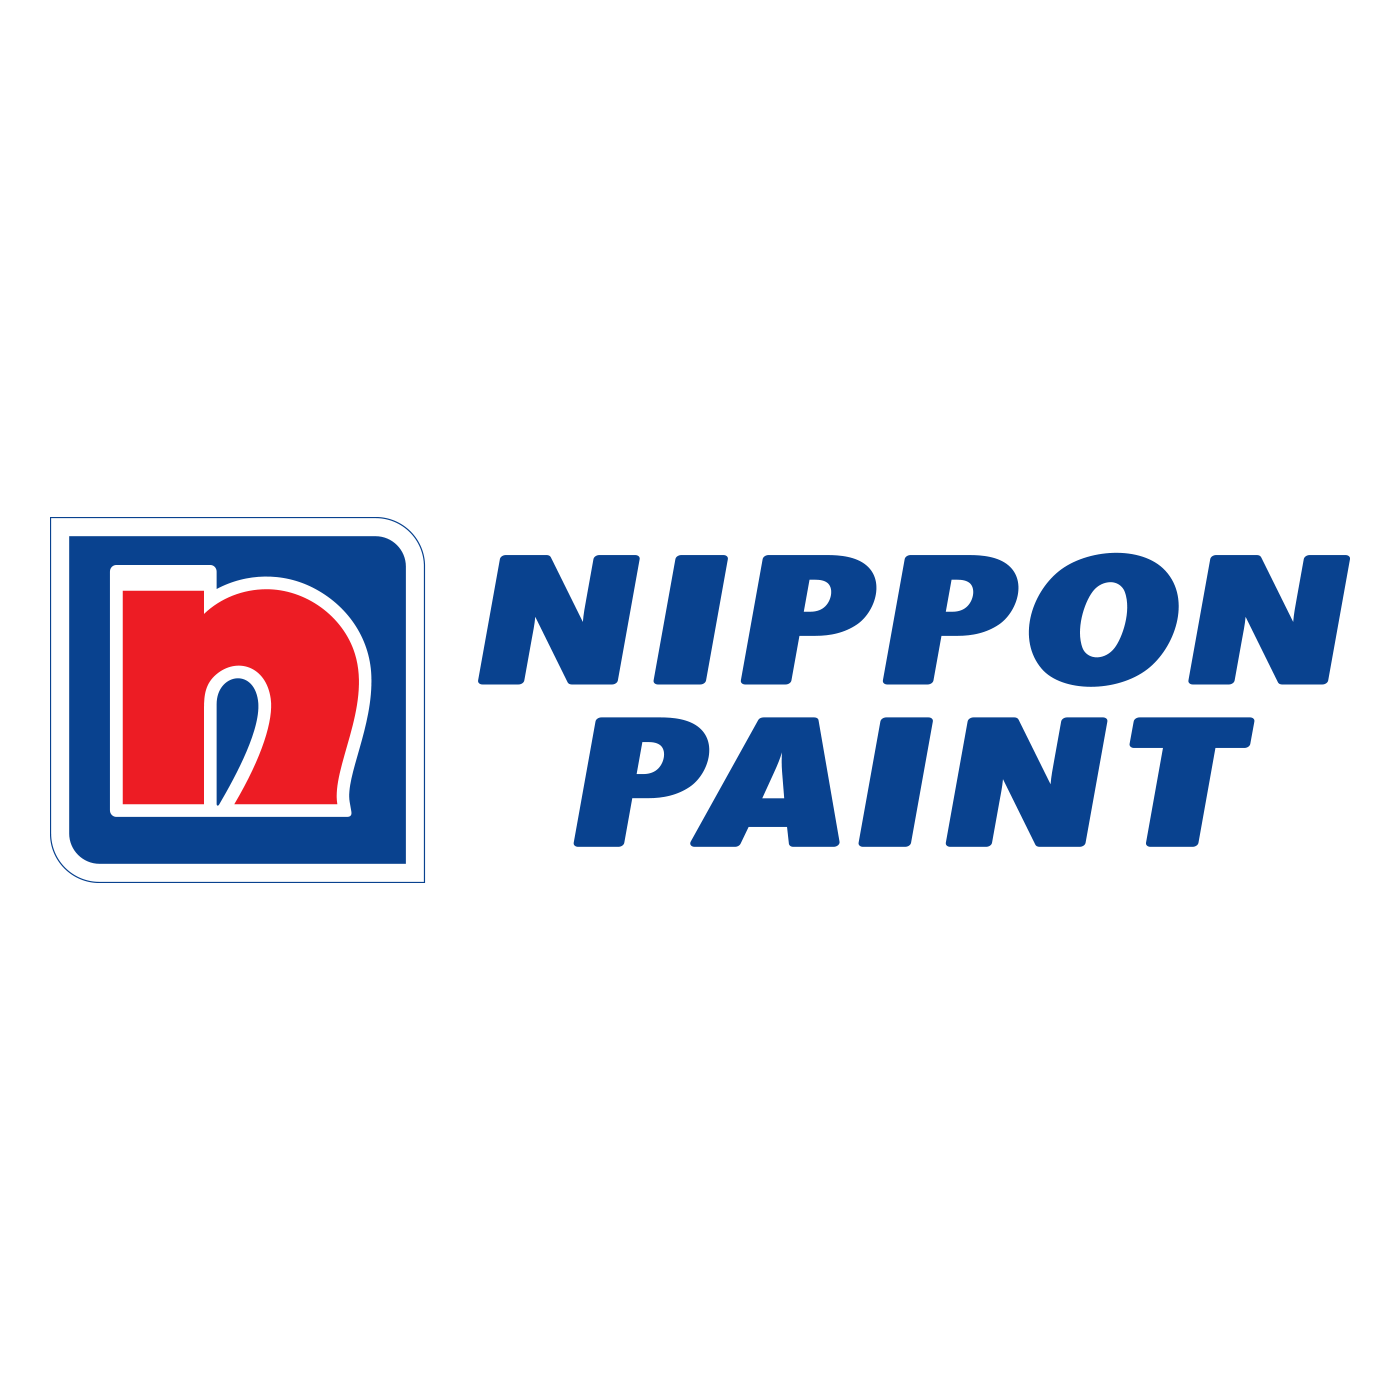 nippon paint